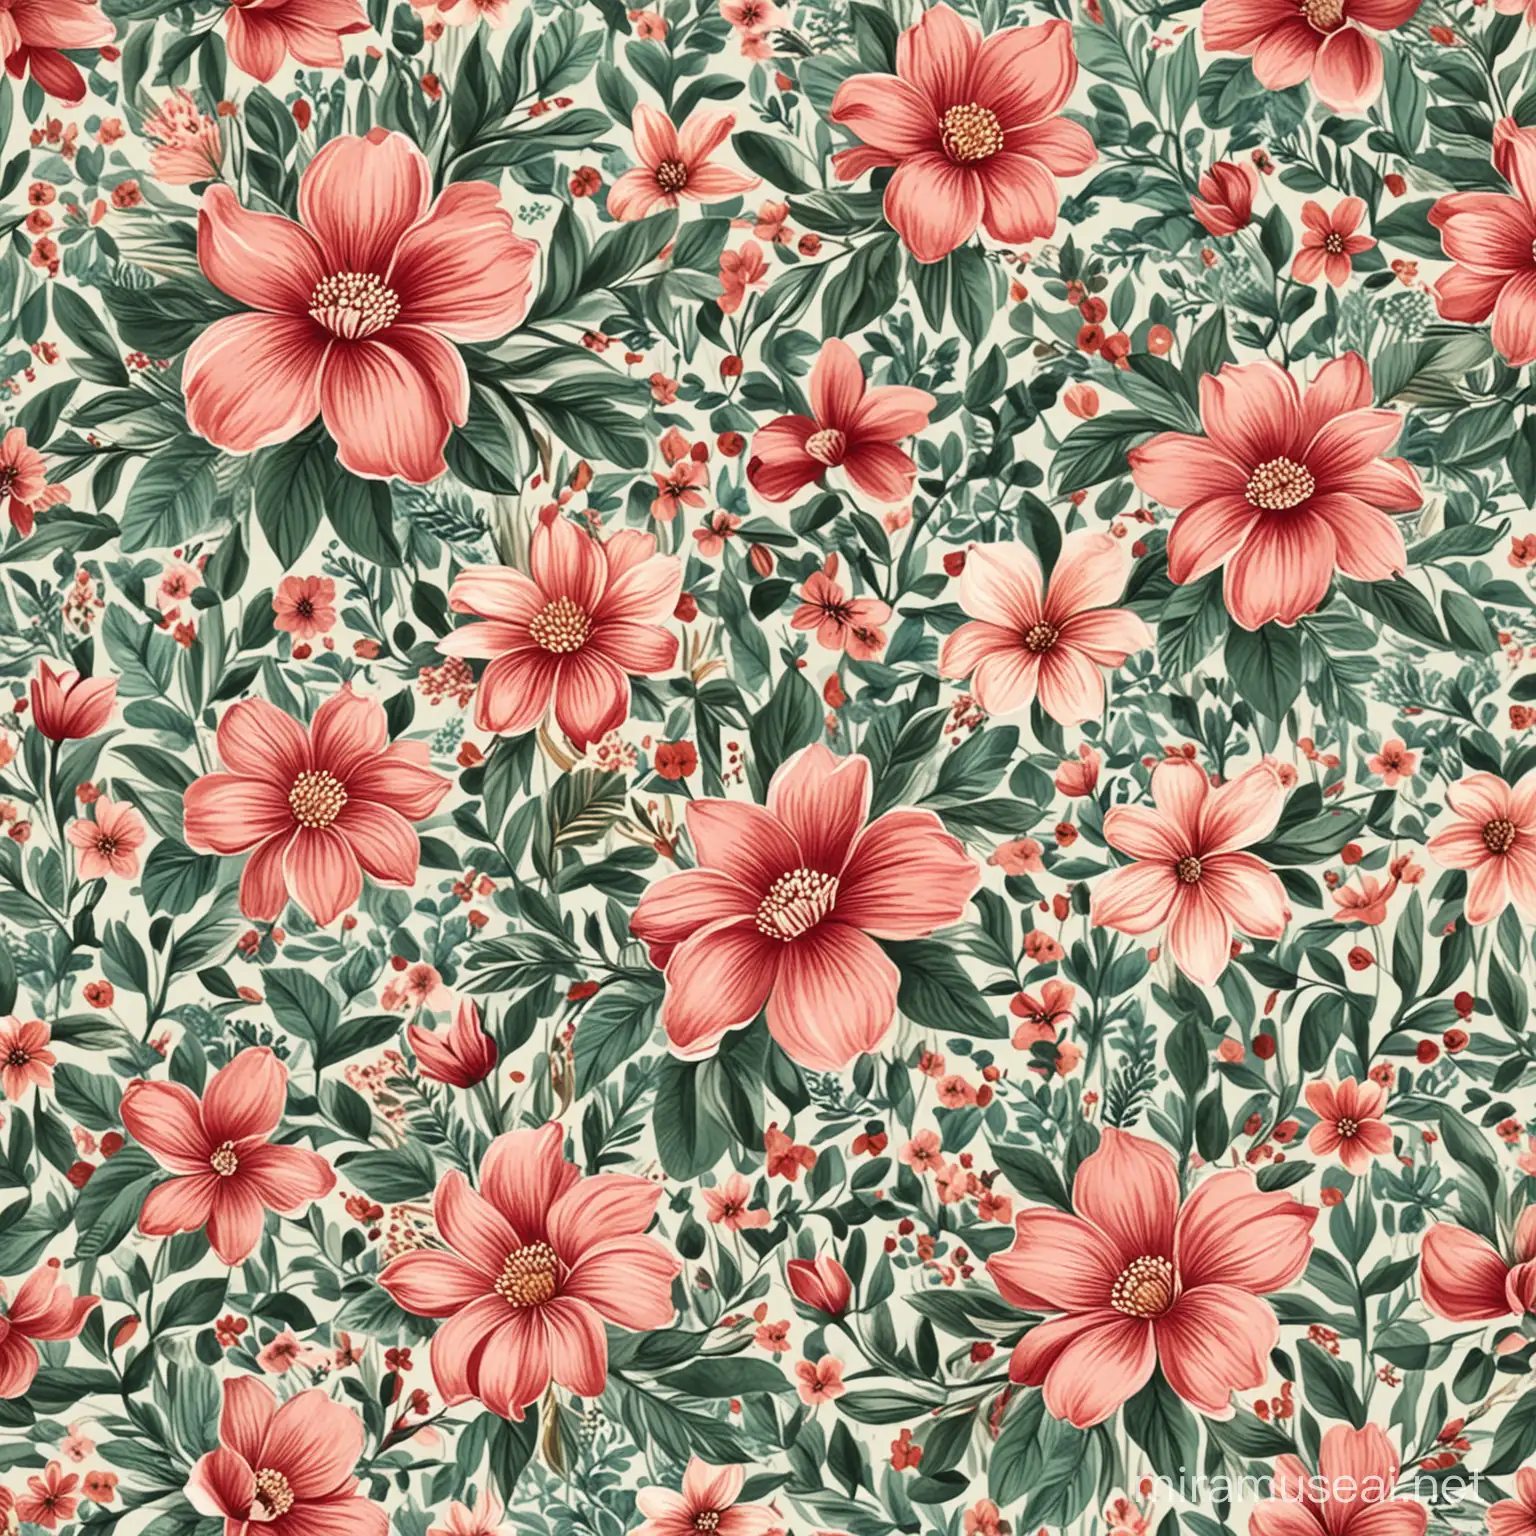 create a floral prints pattern